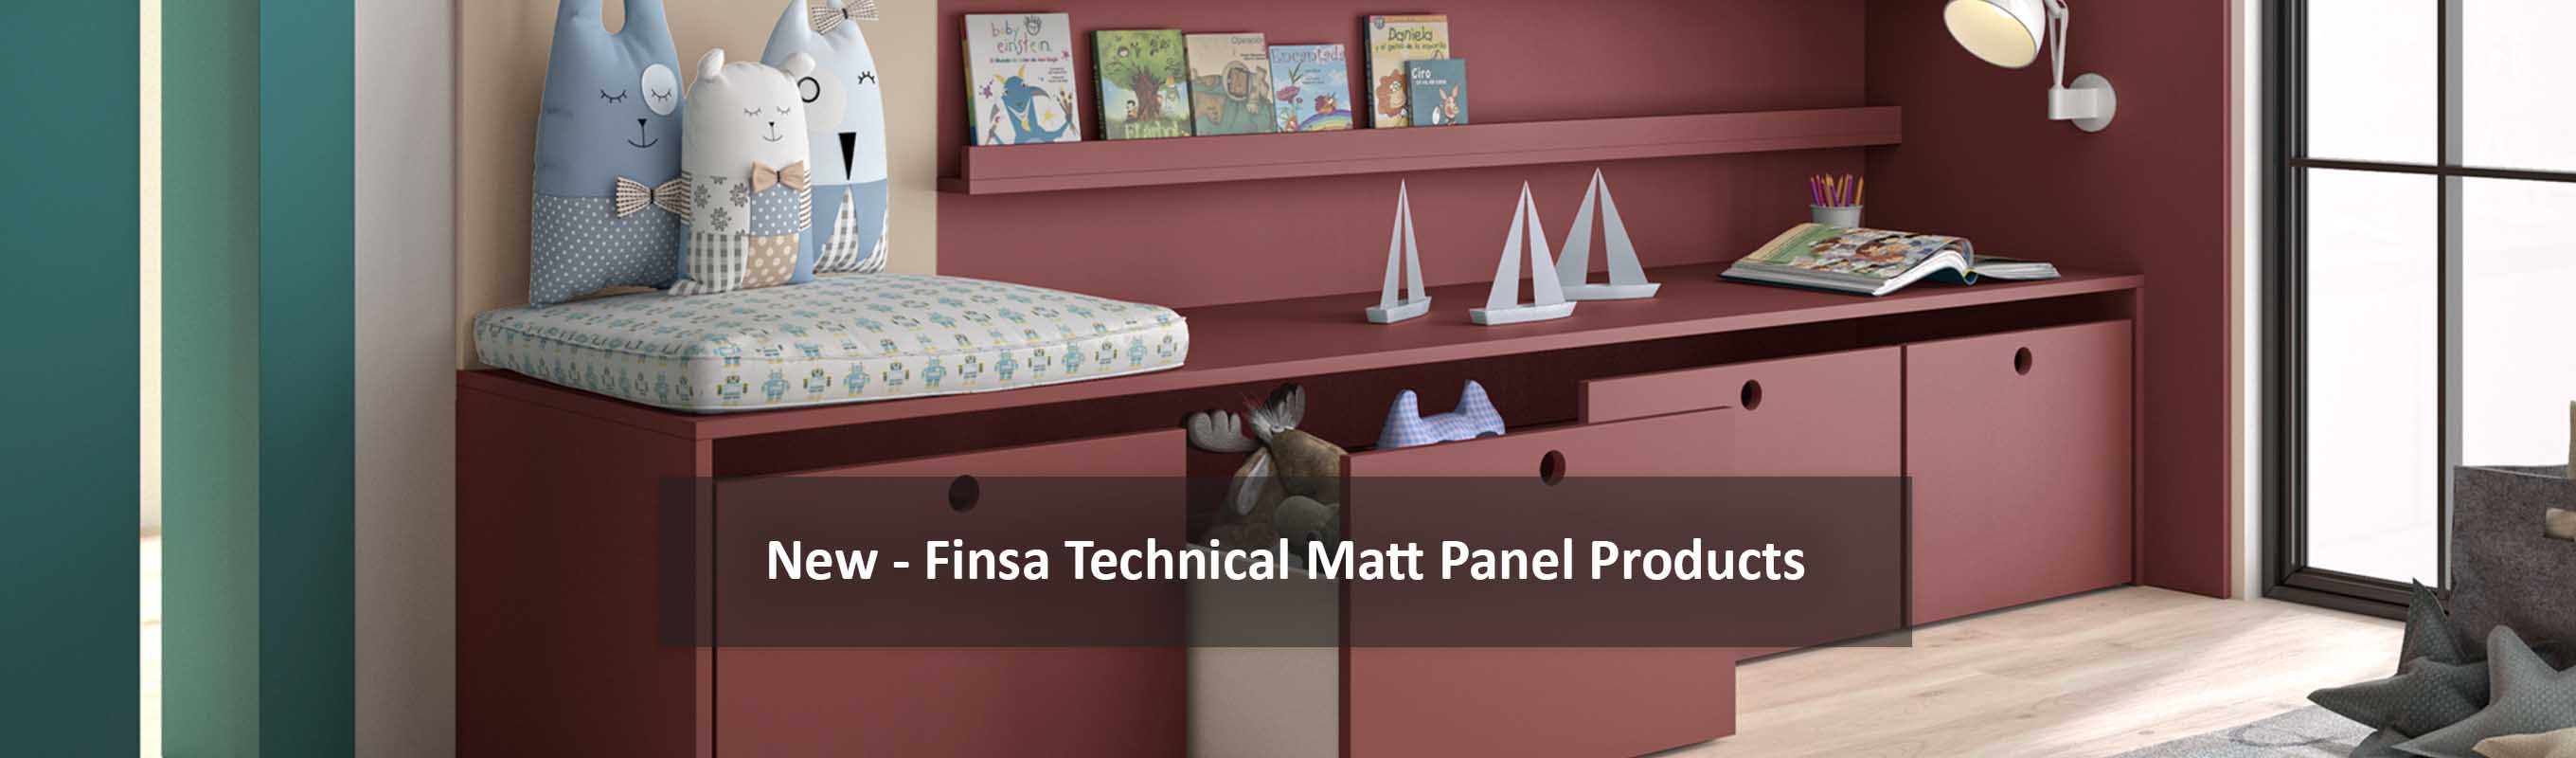 FINSA - Technical Matt Decorative Solutions